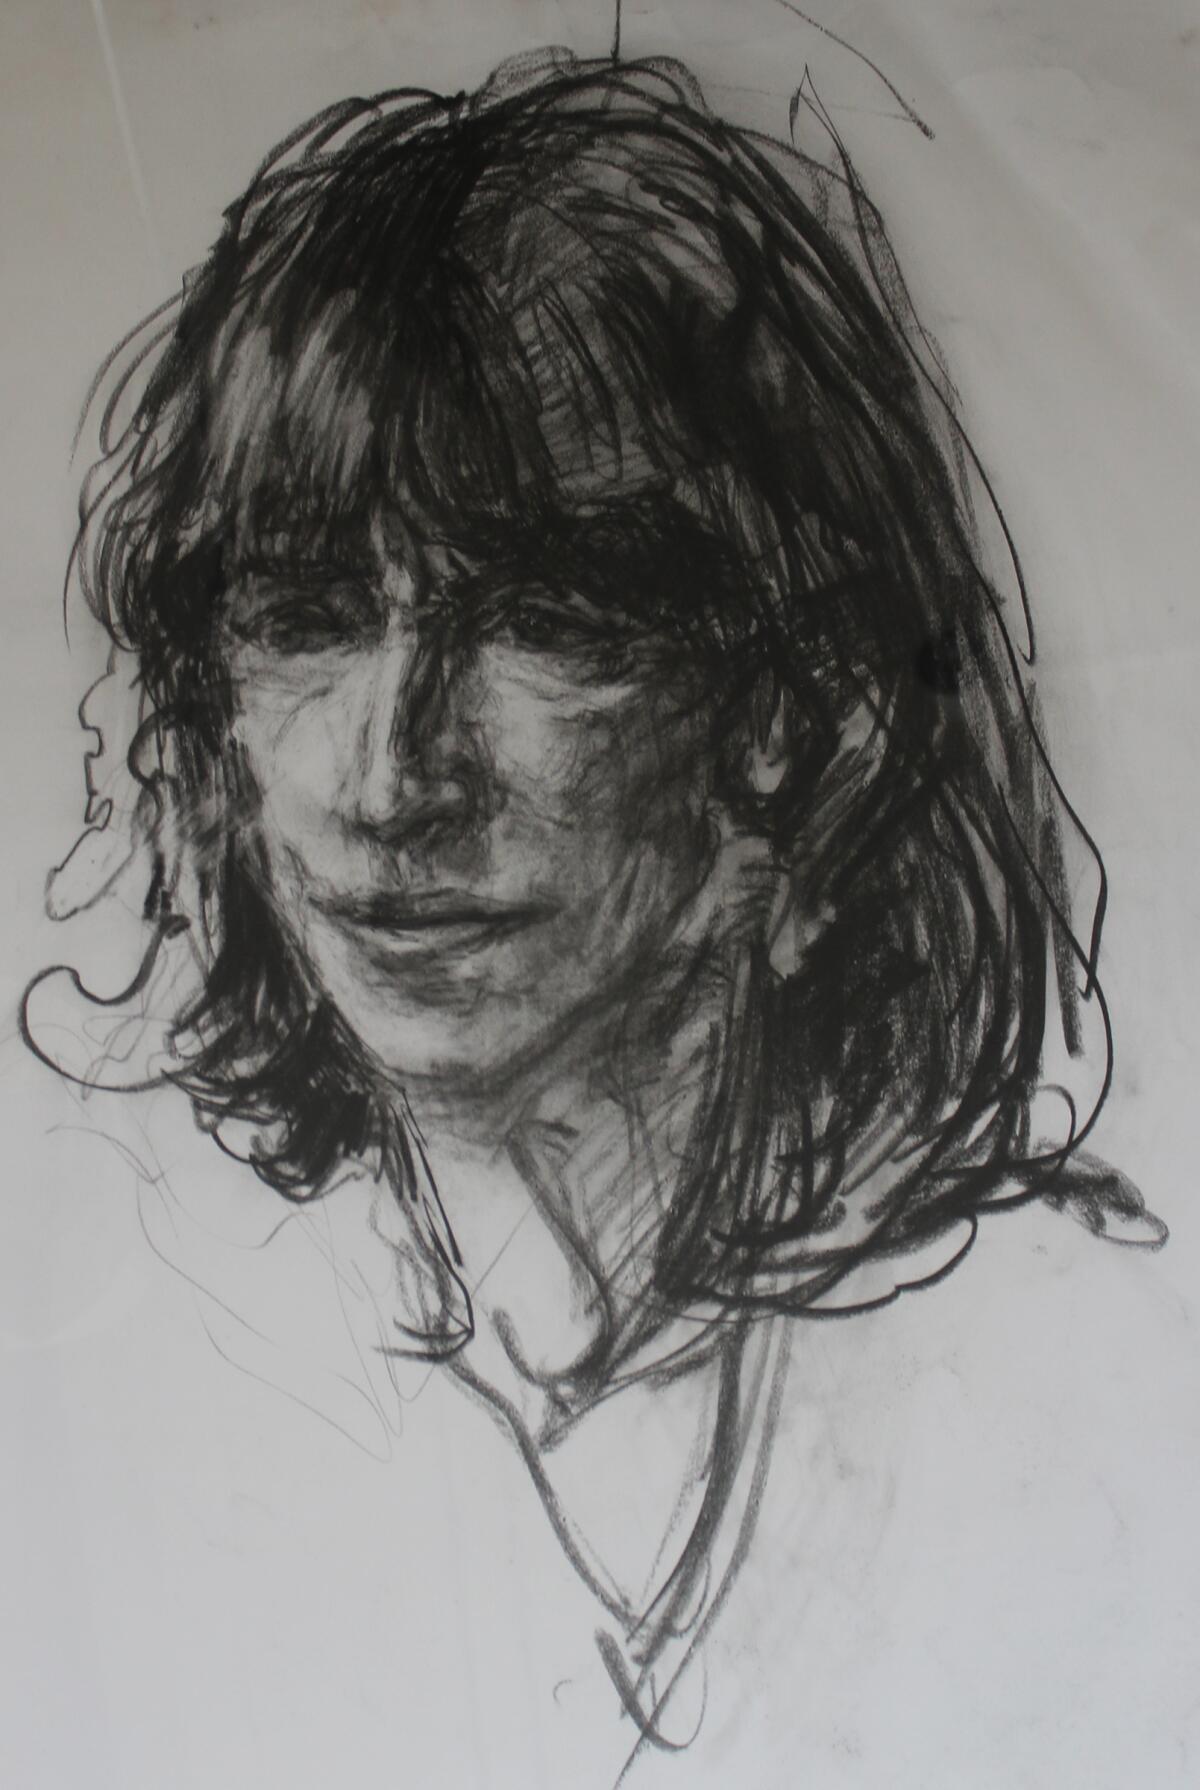 A black-and-white sketch of award-winning biographer Judith Thurman